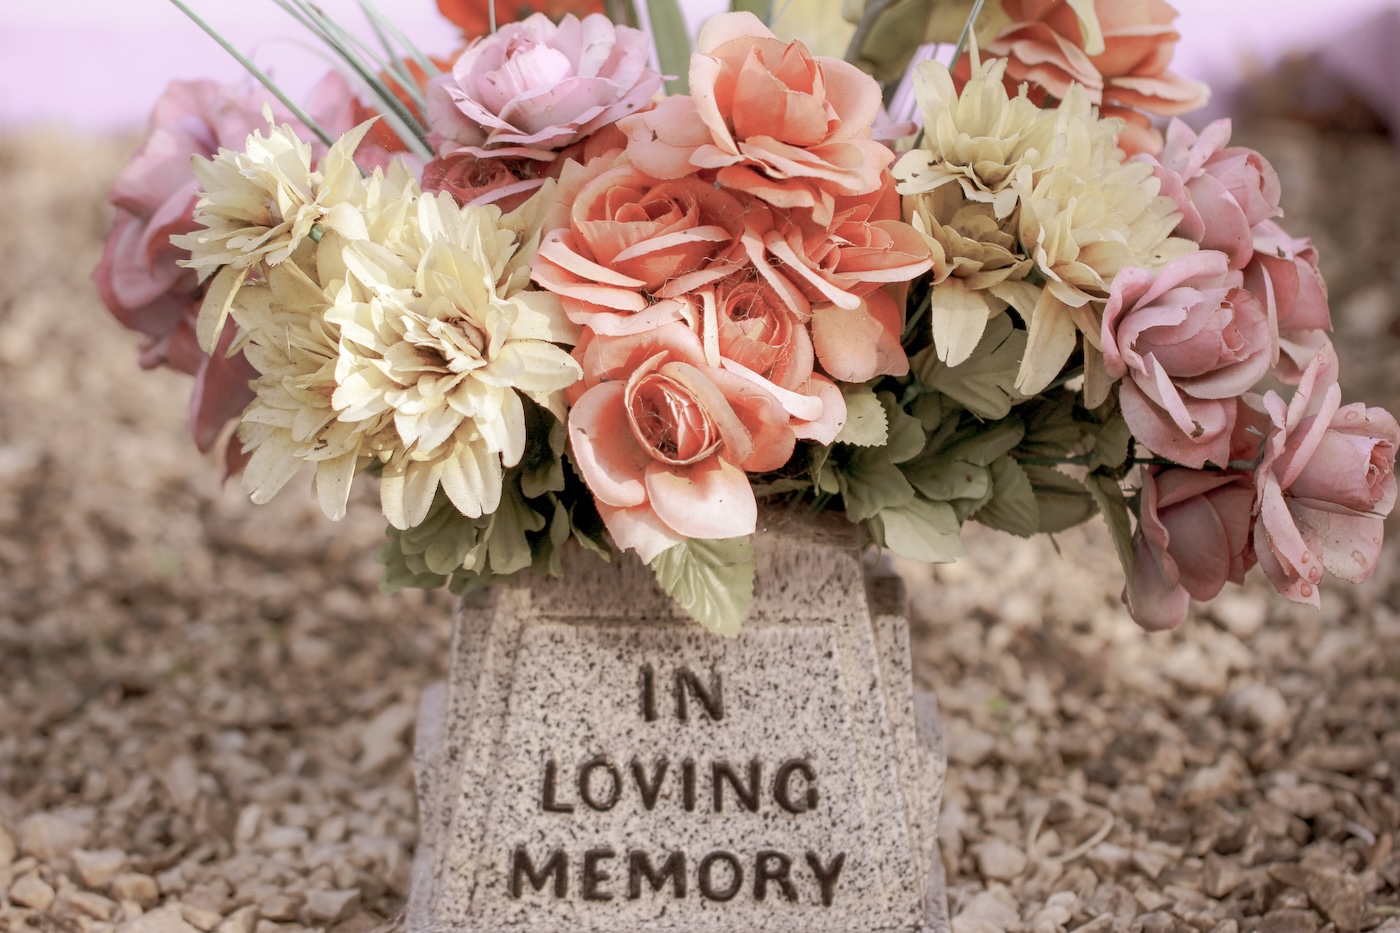 In loving memory grieving